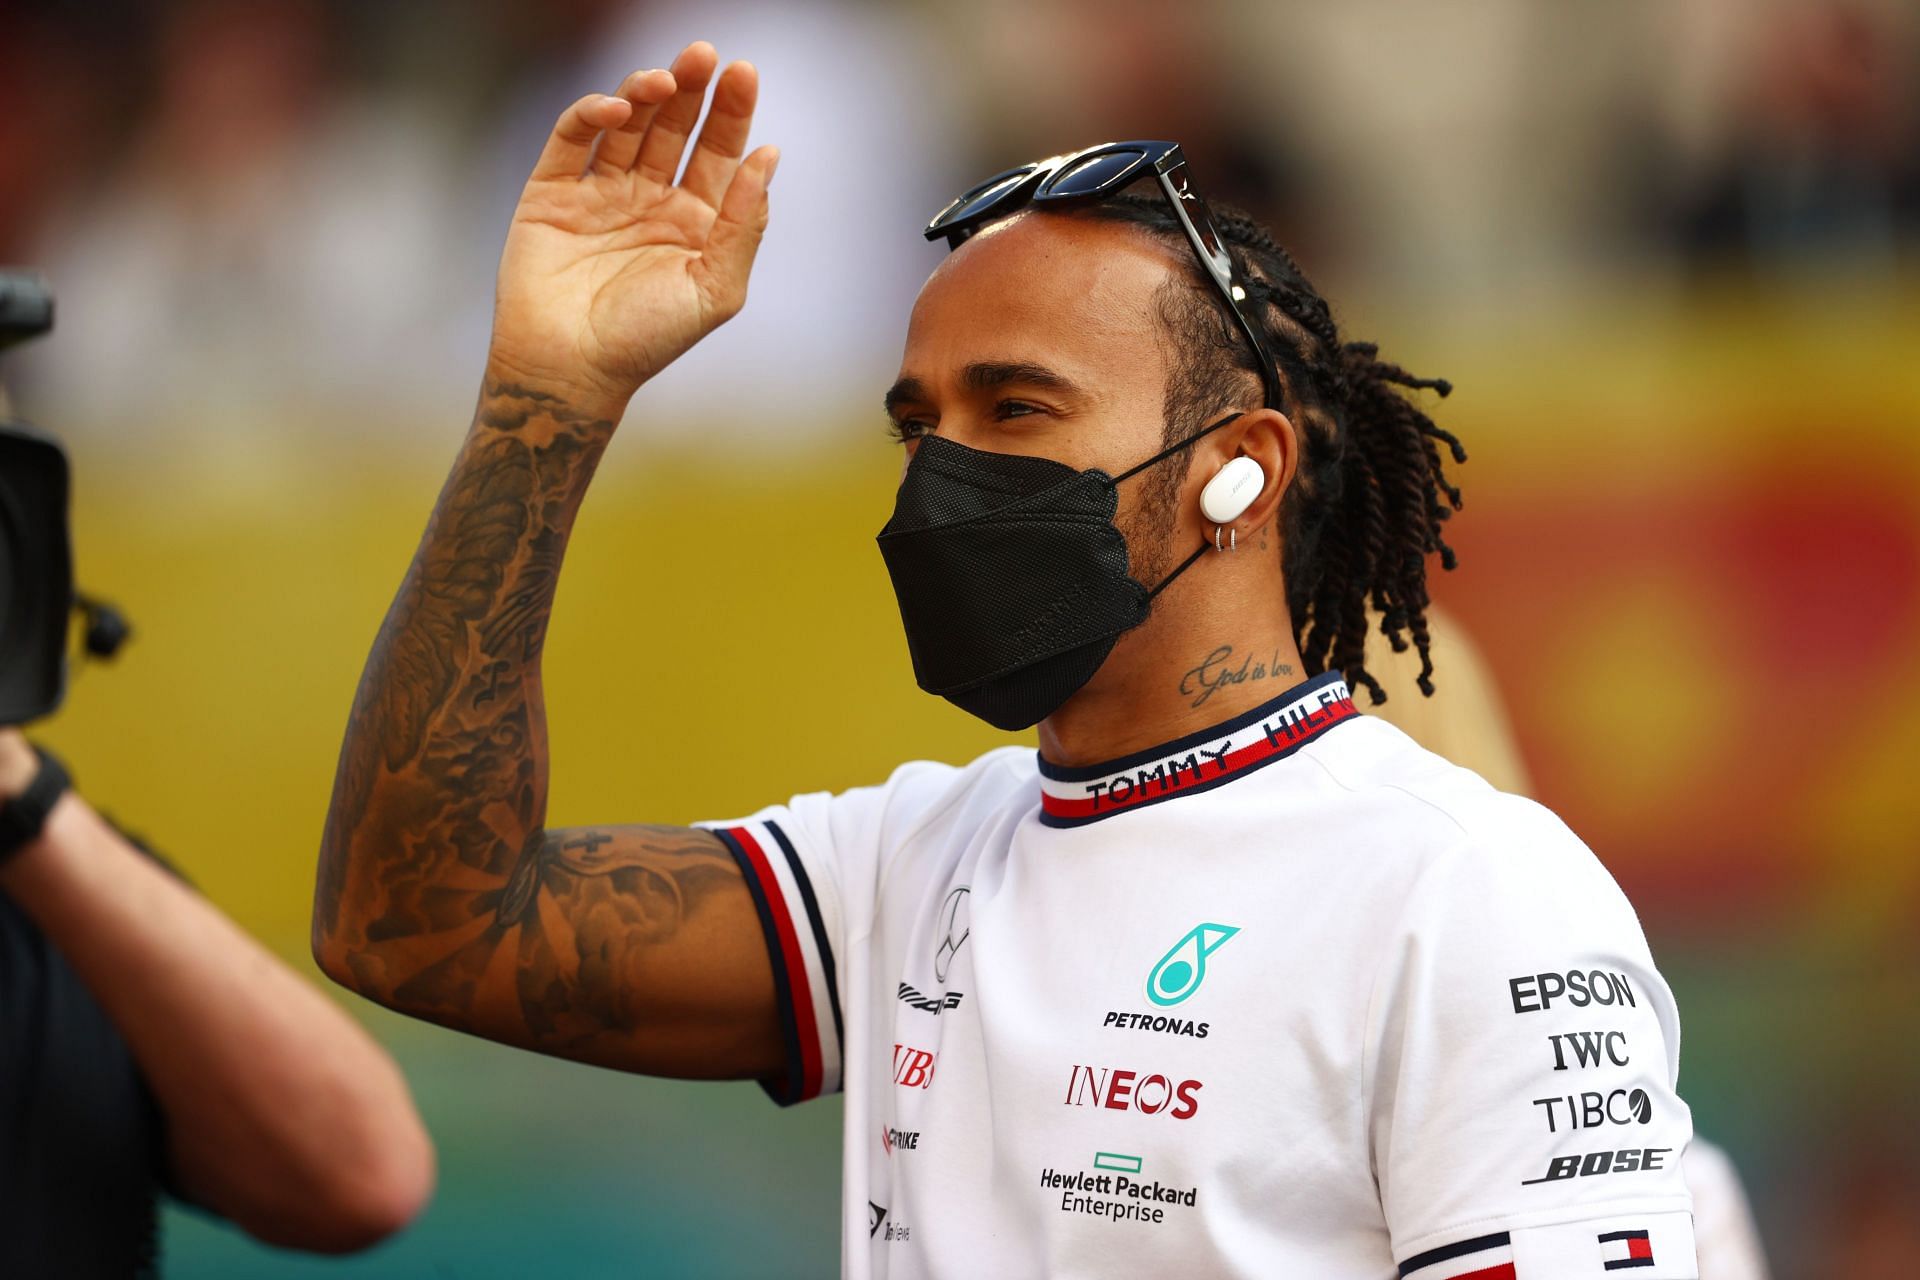 F1 Grand Prix of Abu Dhabi - Lewis Hamilton arrives in the paddock